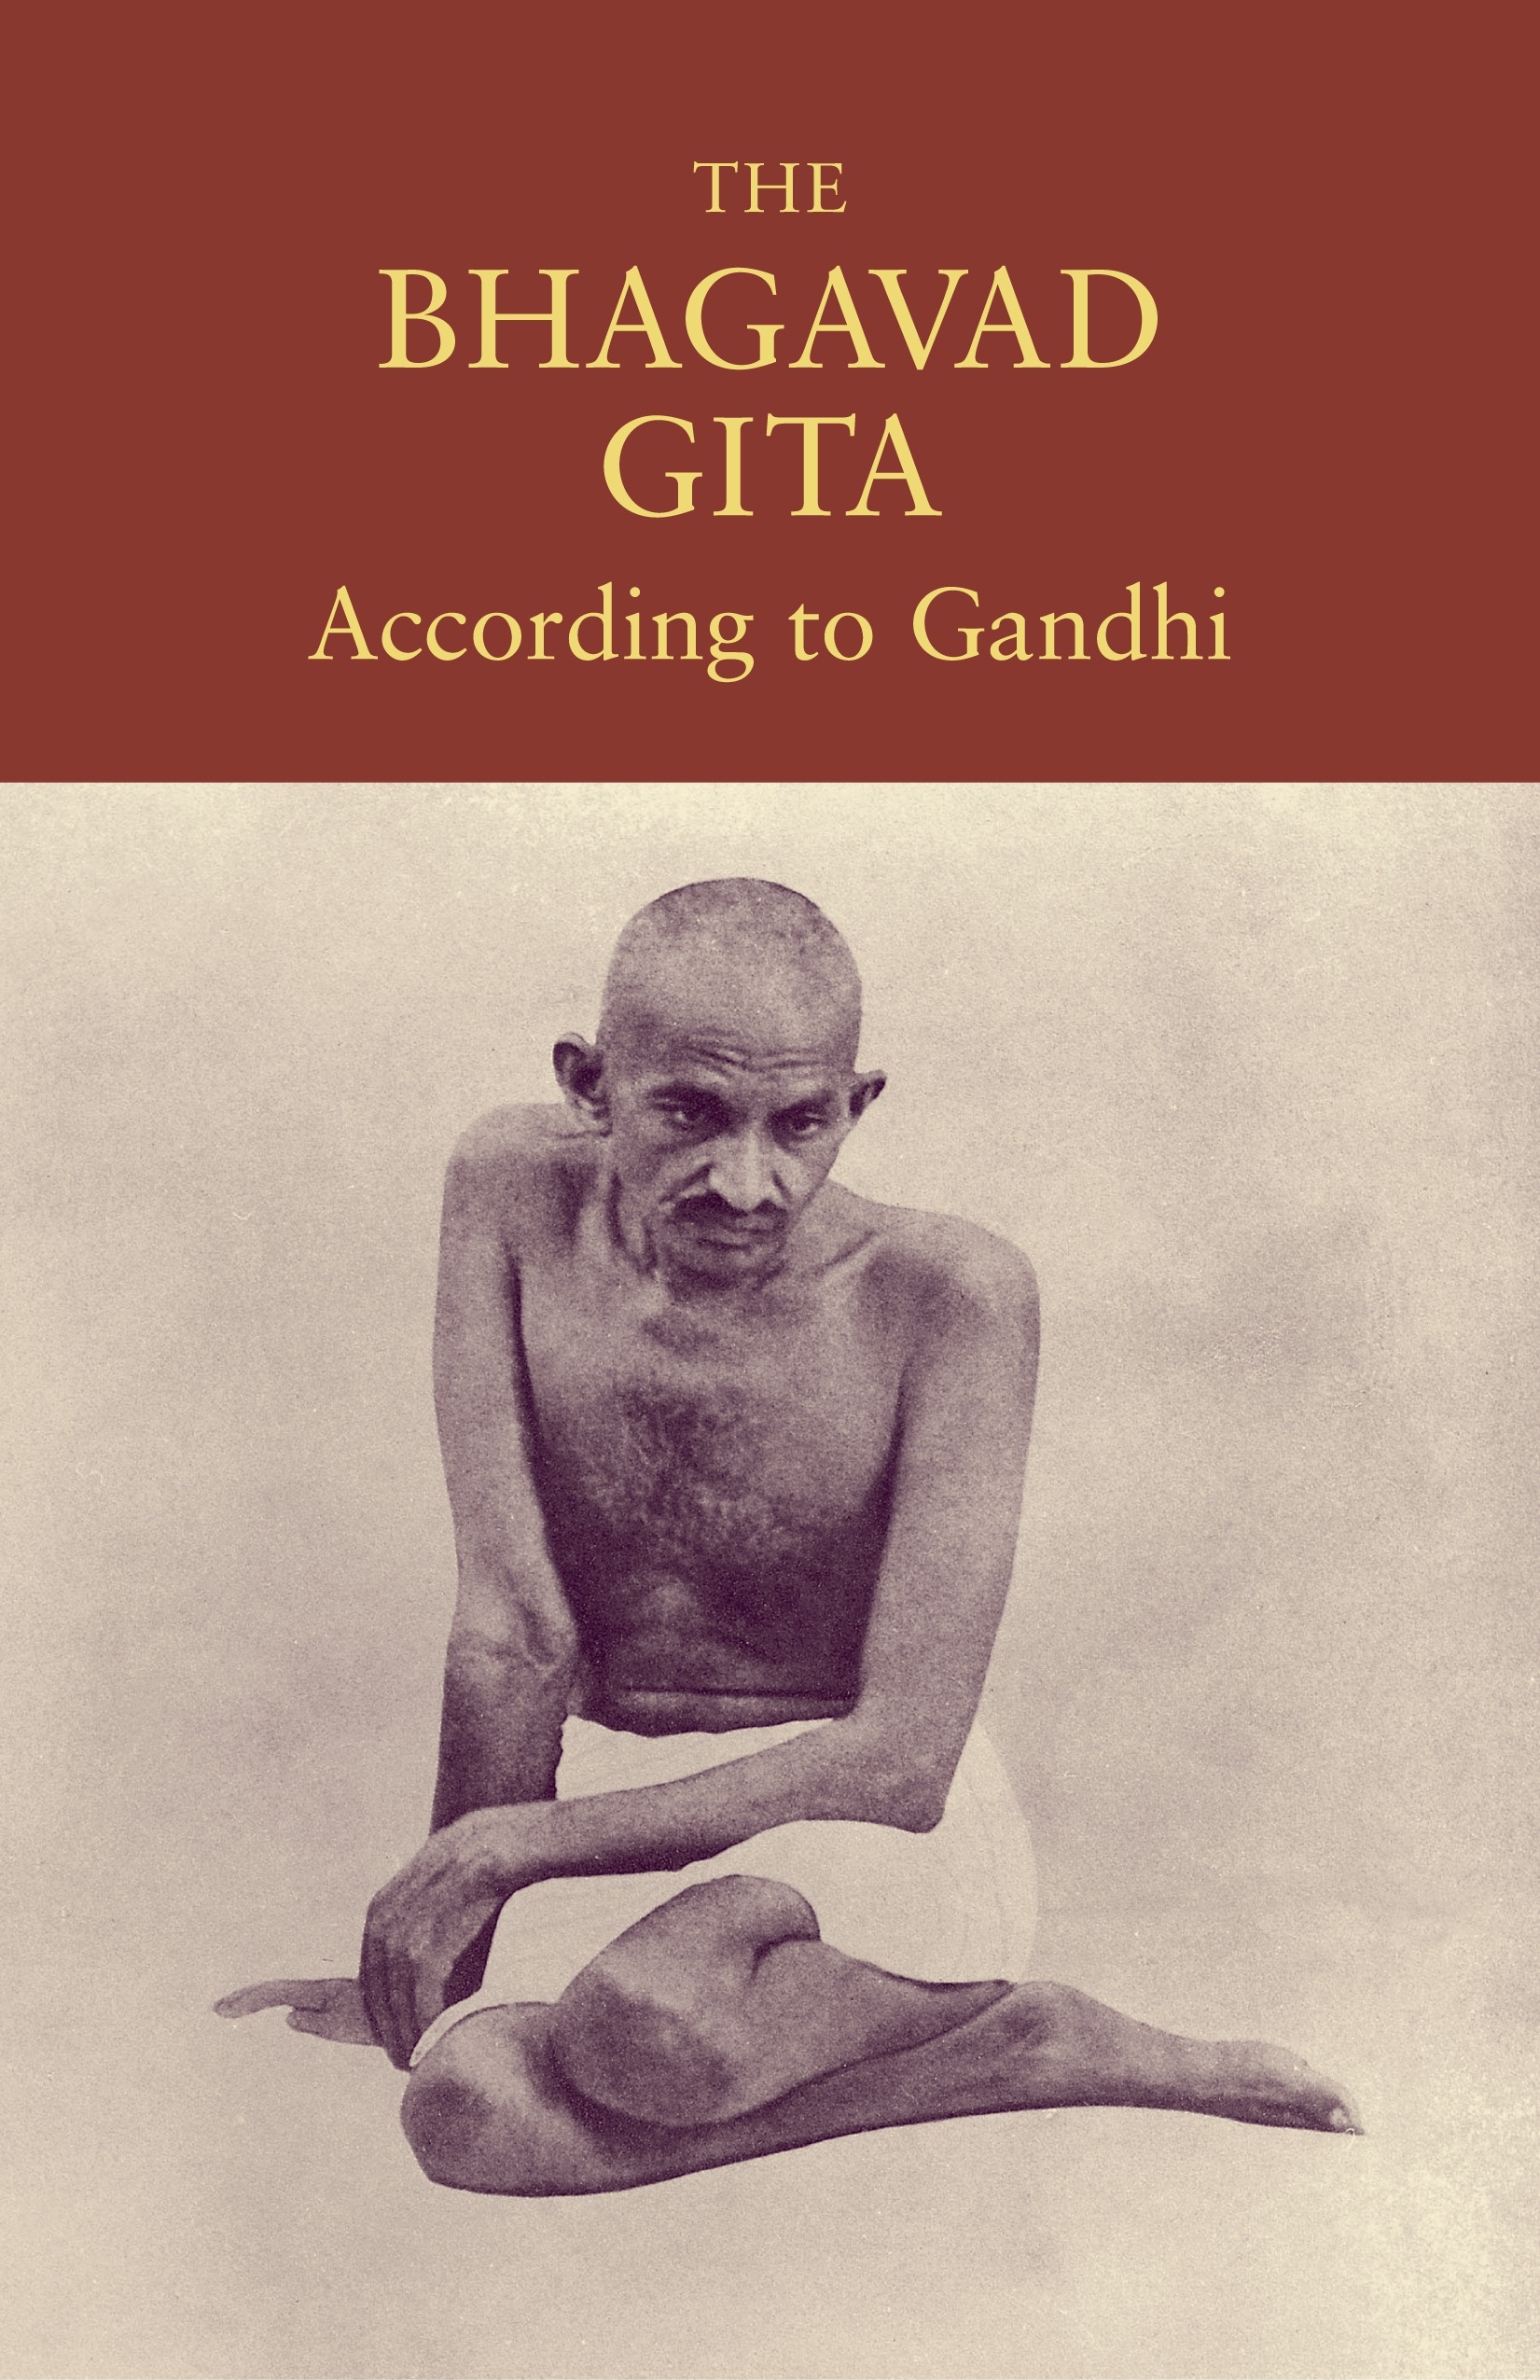 book review on mahatma gandhi